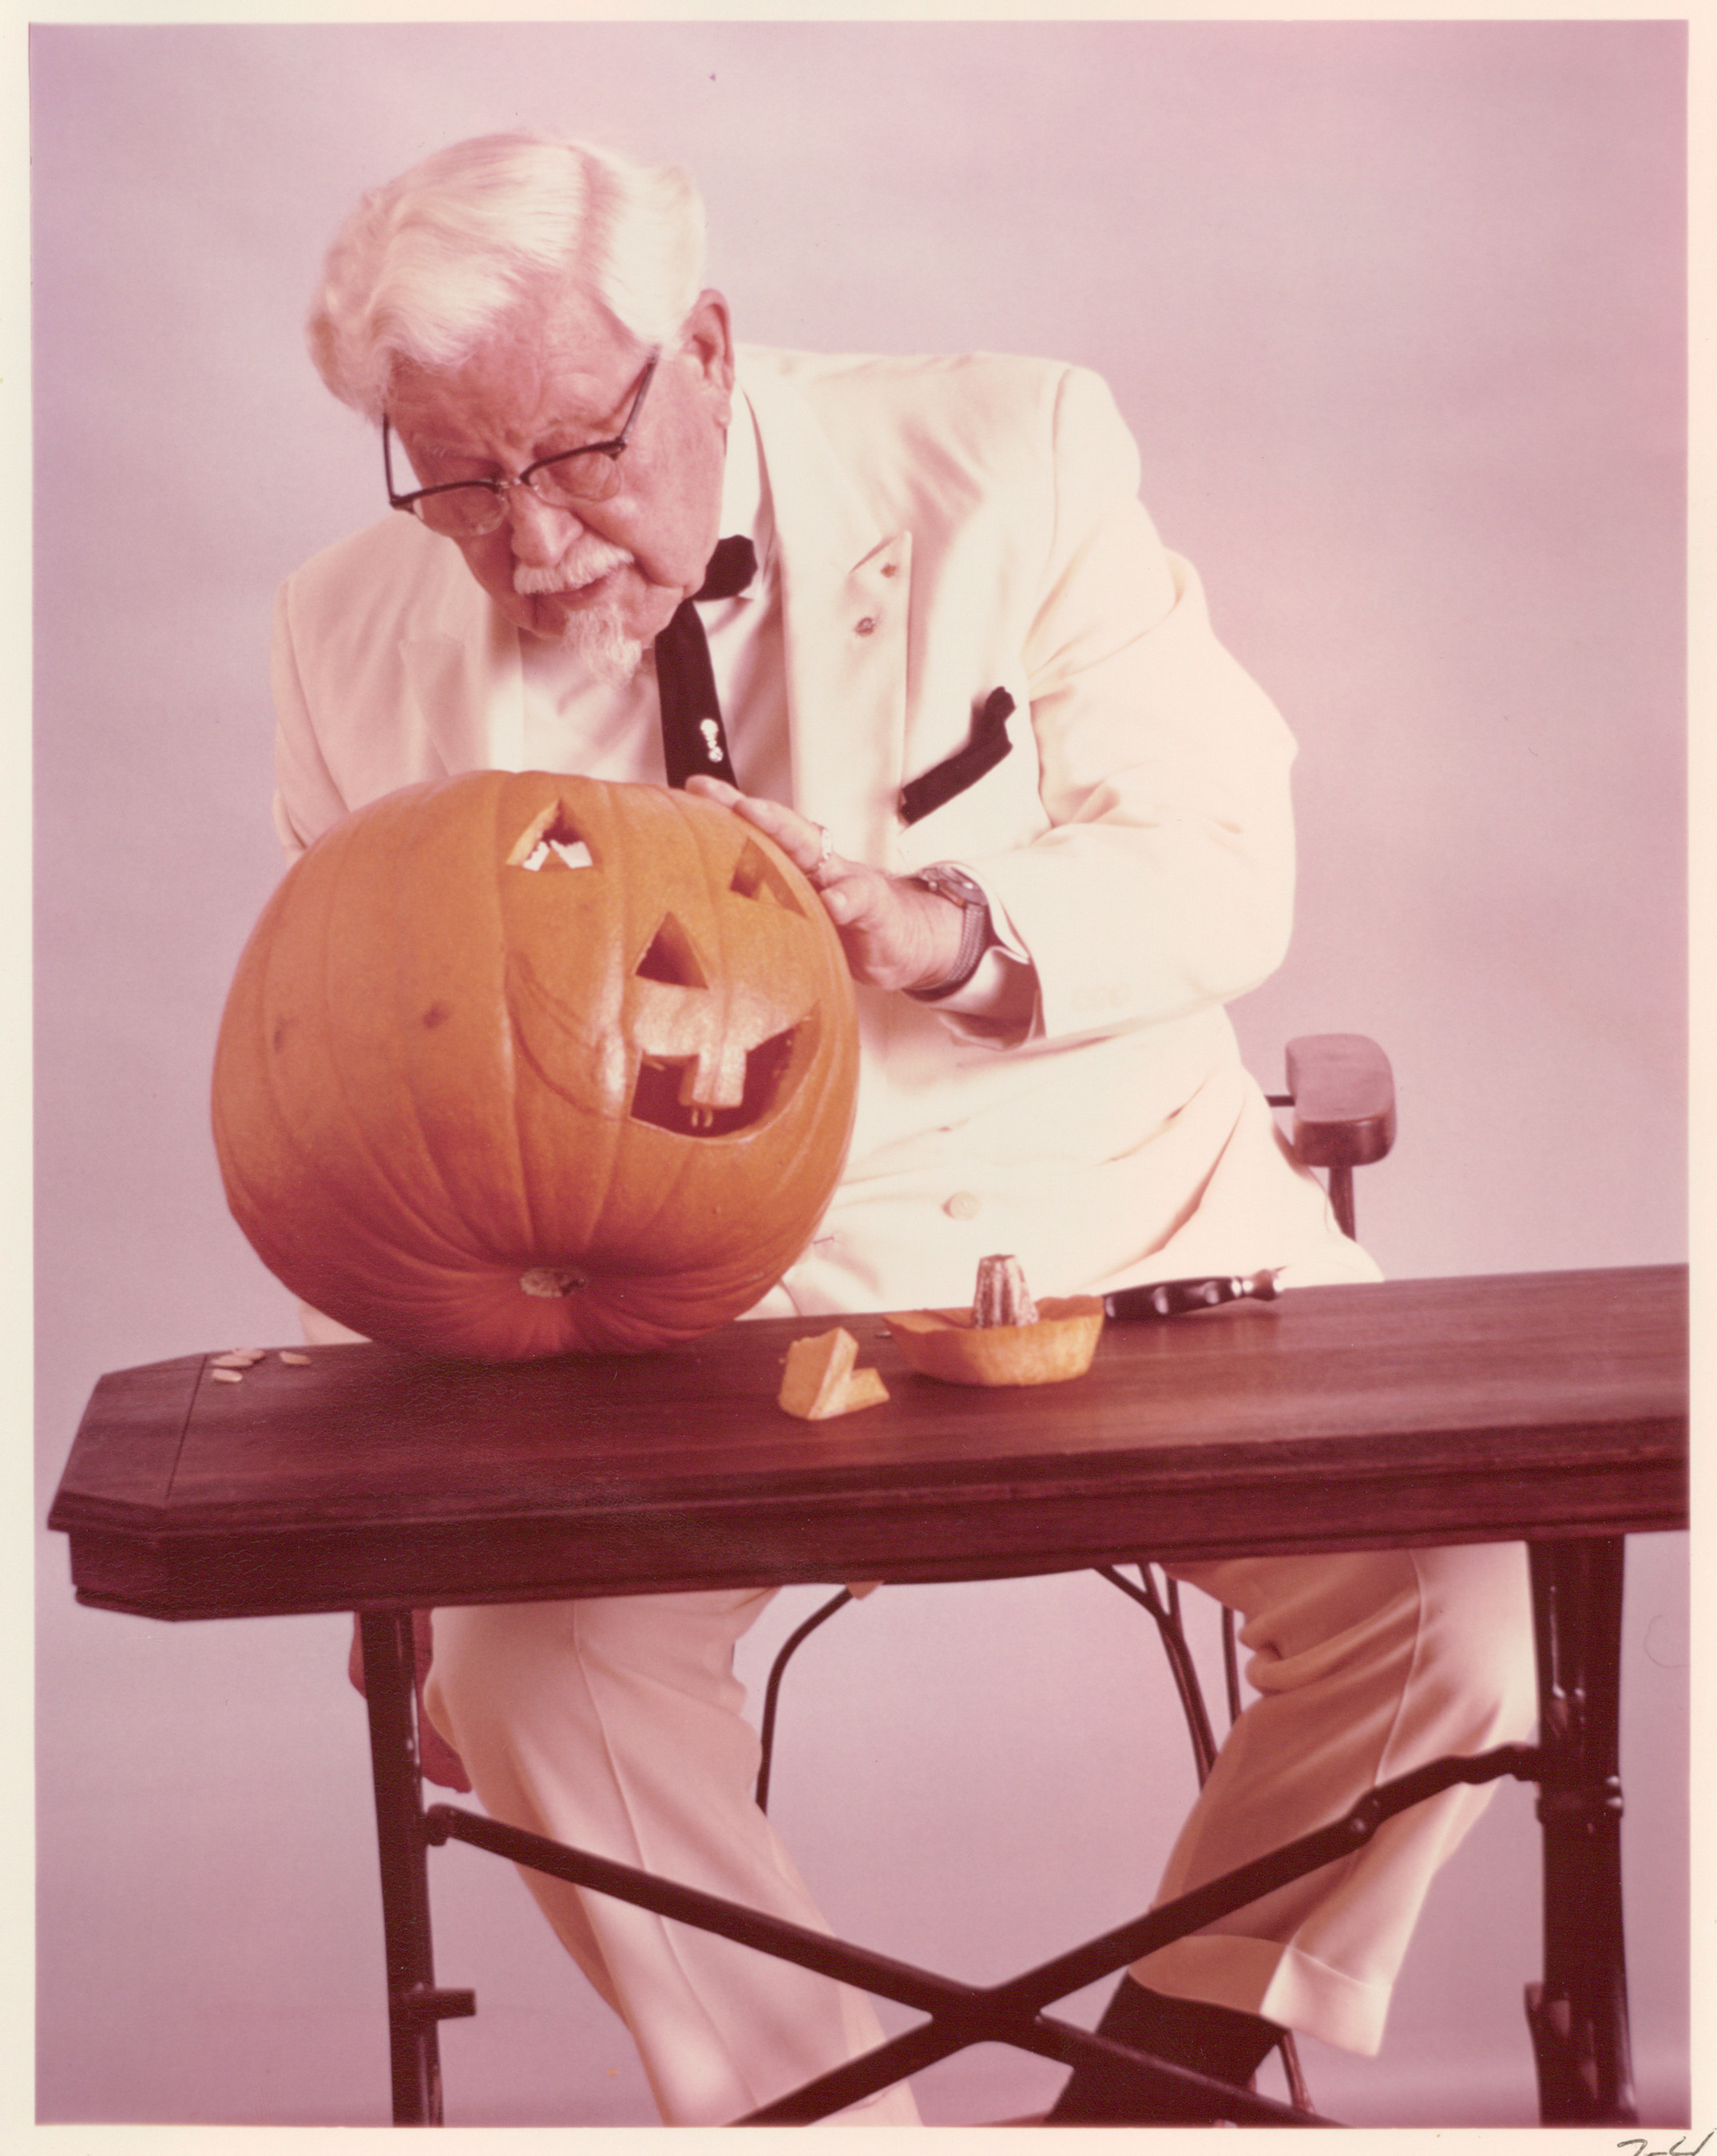 Colonel Sanders carves a Jack-o-lantern